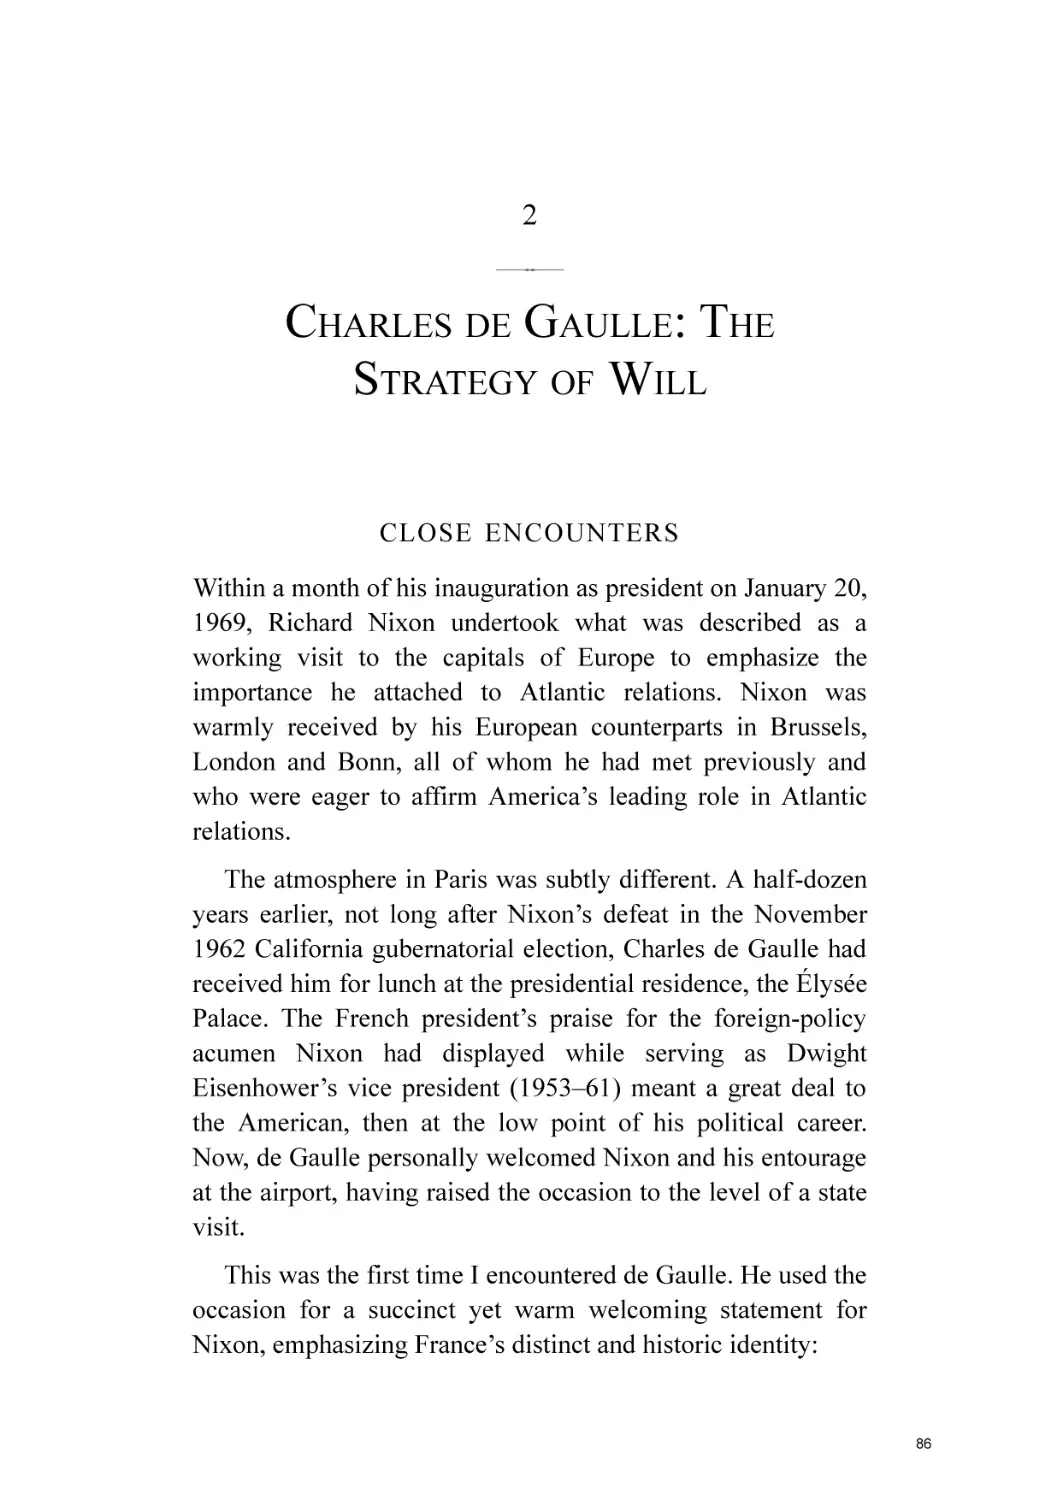 2. Charles de Gaulle
Close Encounters